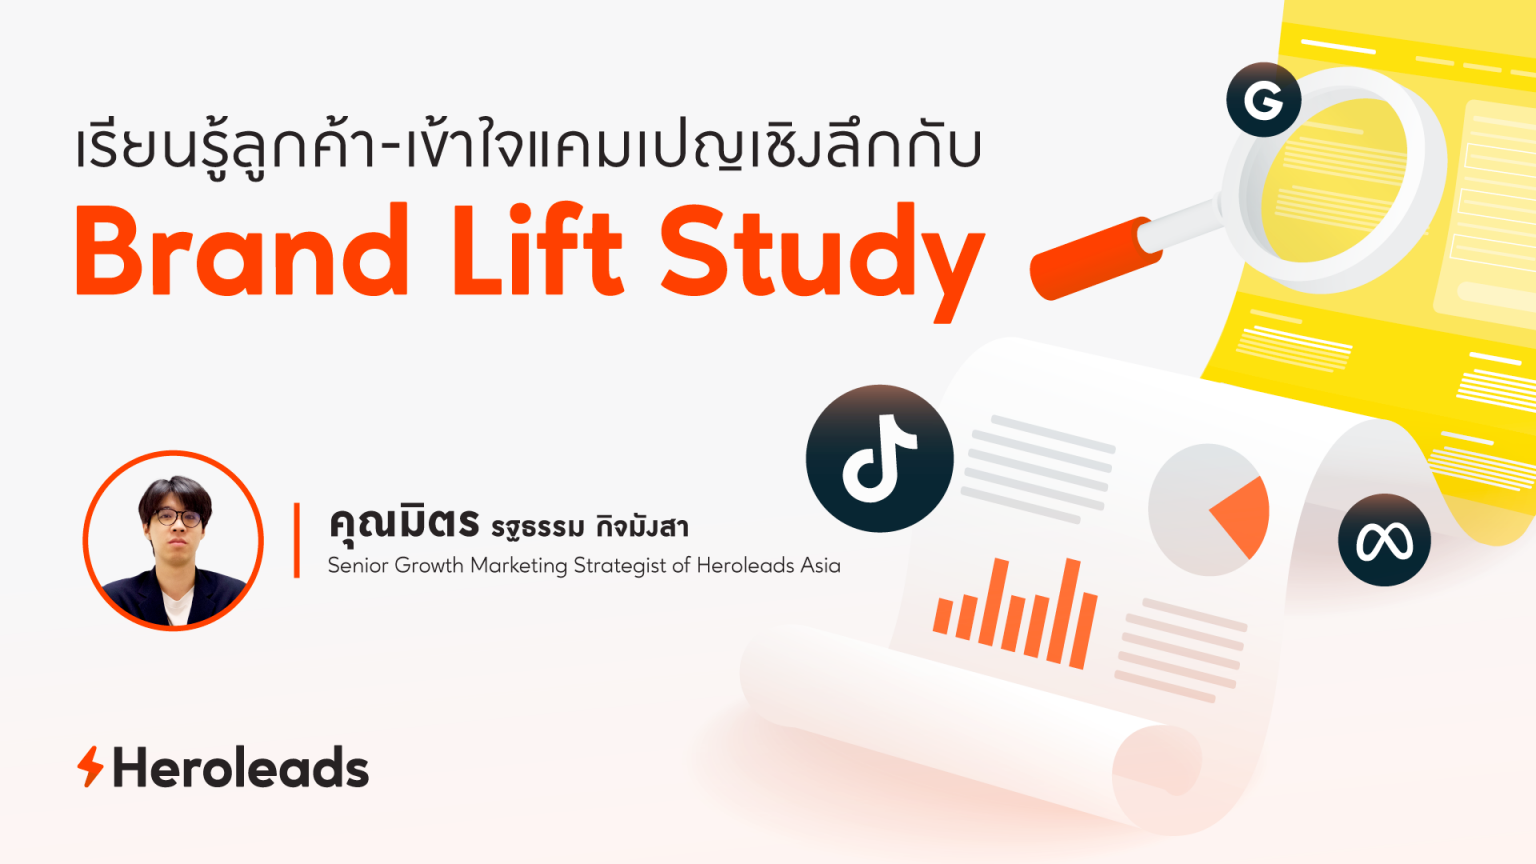 Brand Lift Study